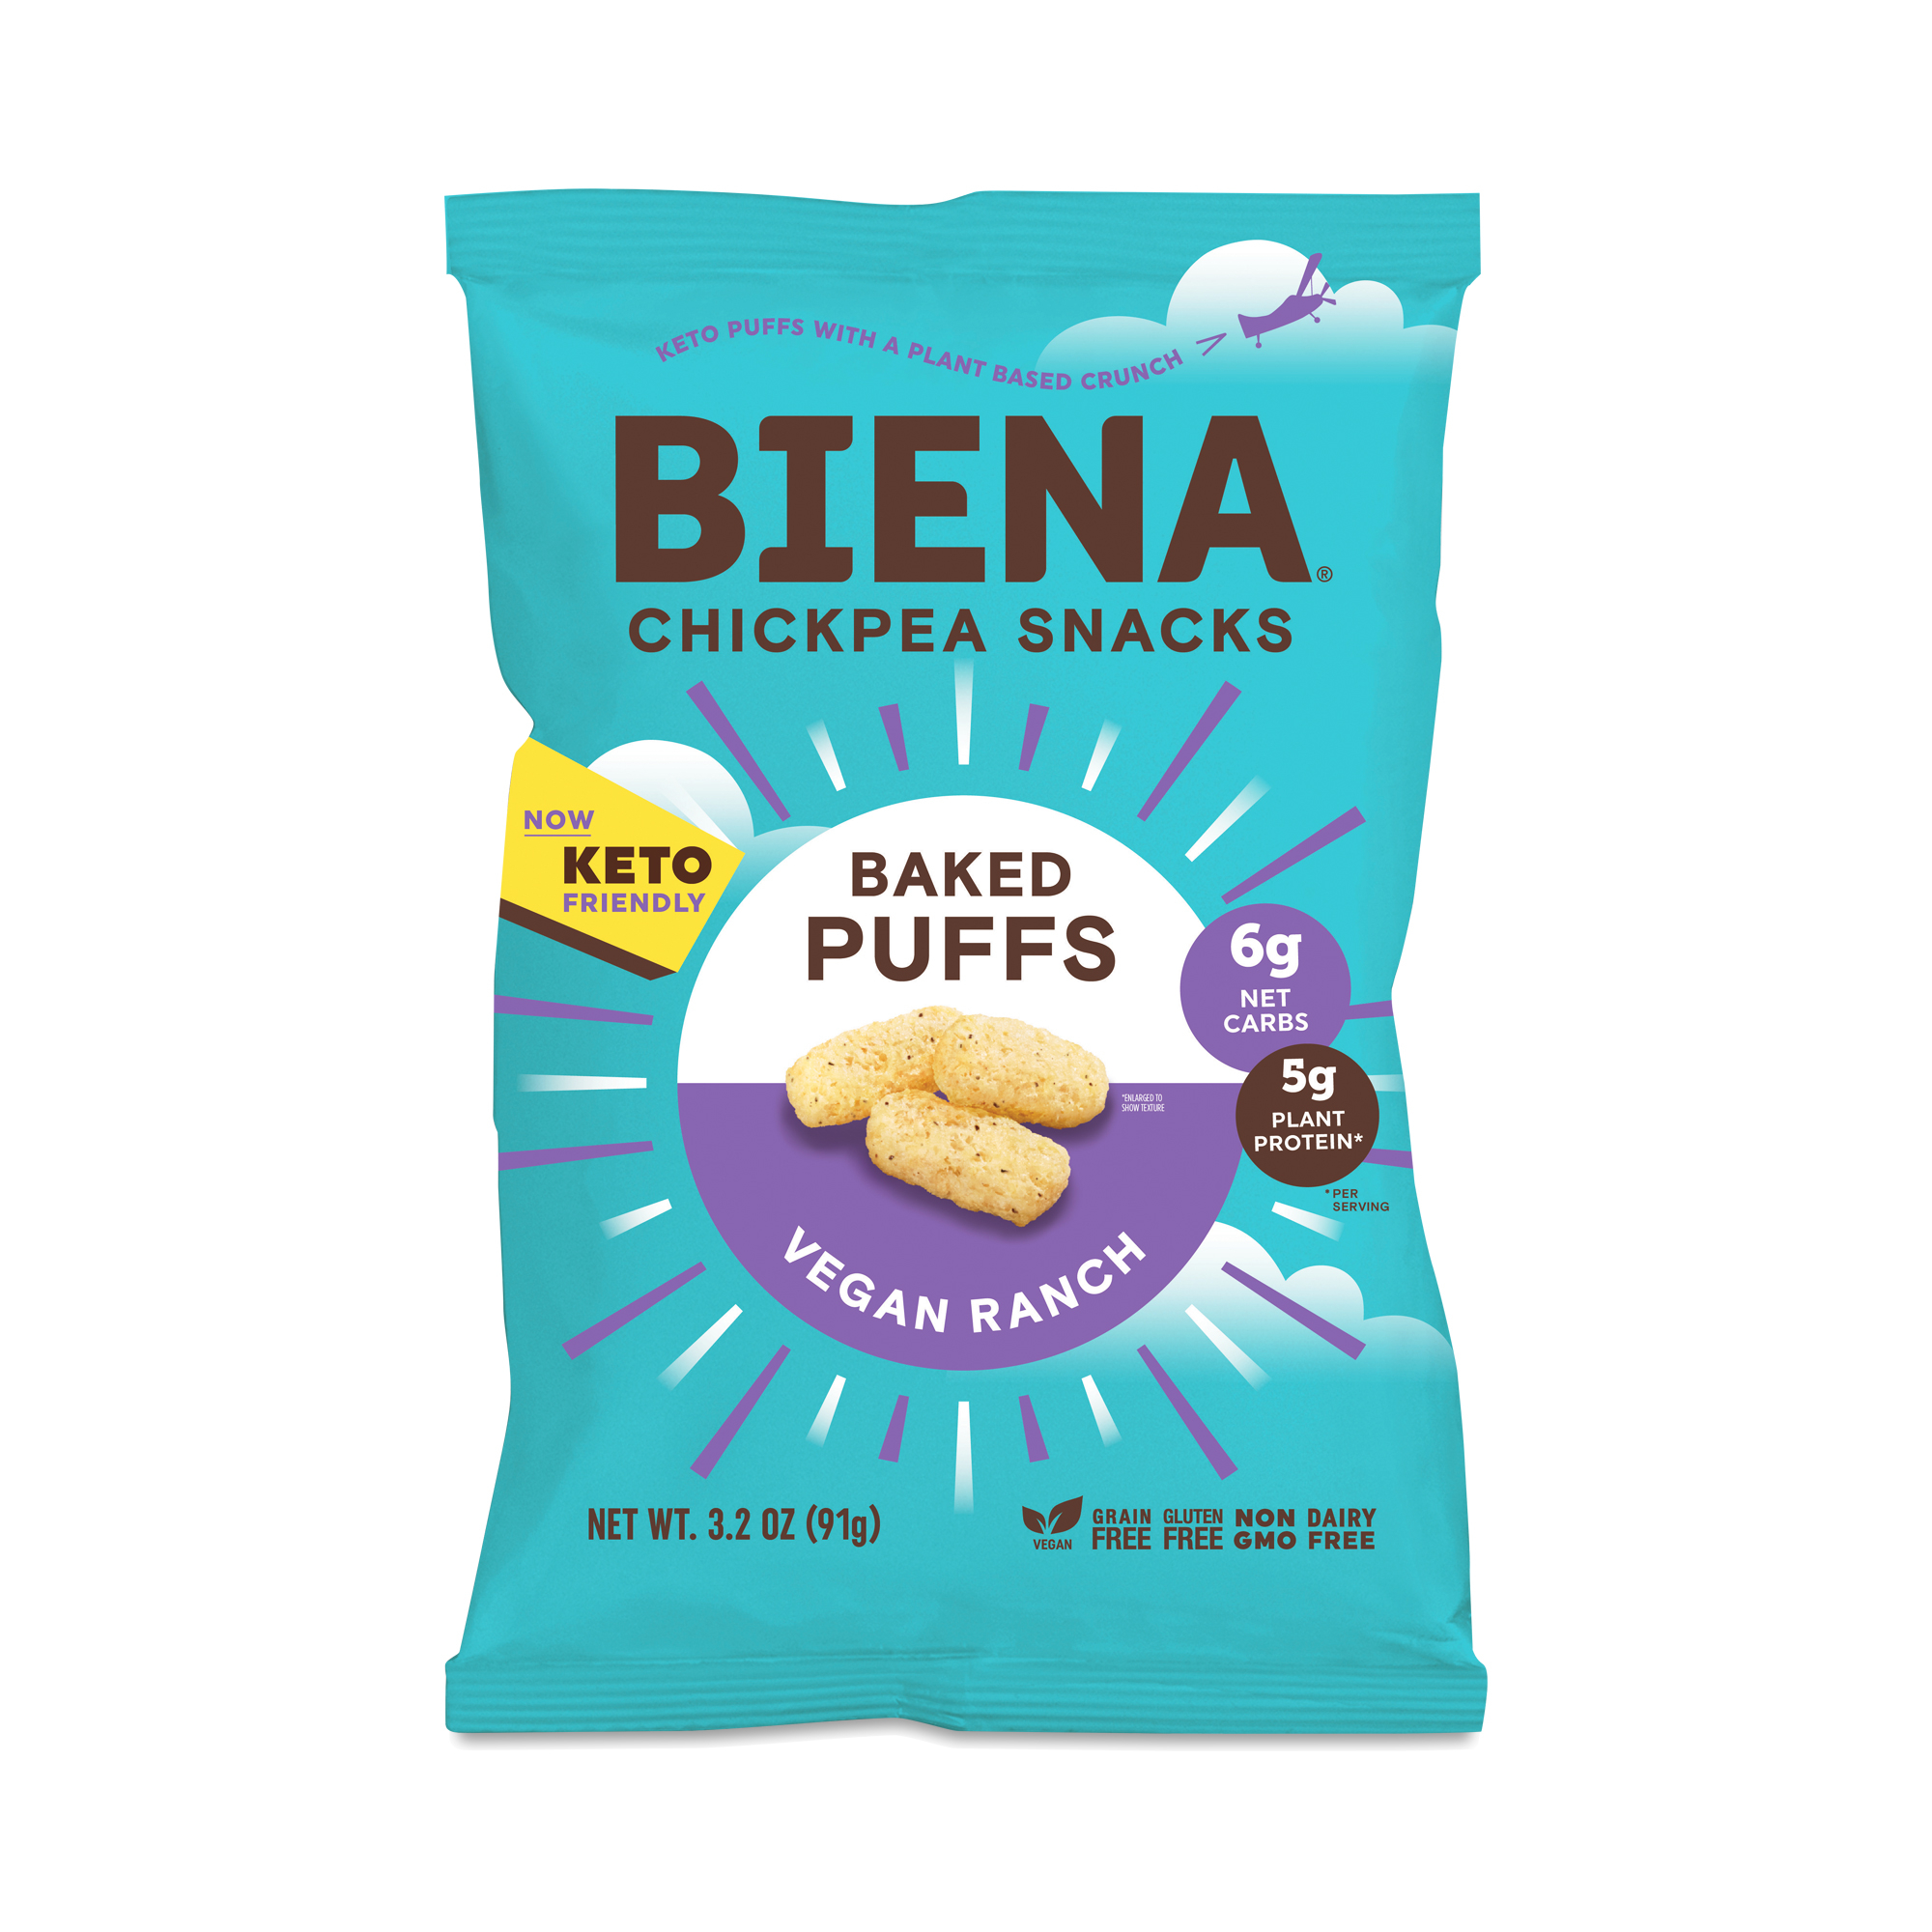 Biena Baked Puffs, Vegan Ranch 3.2 oz bag